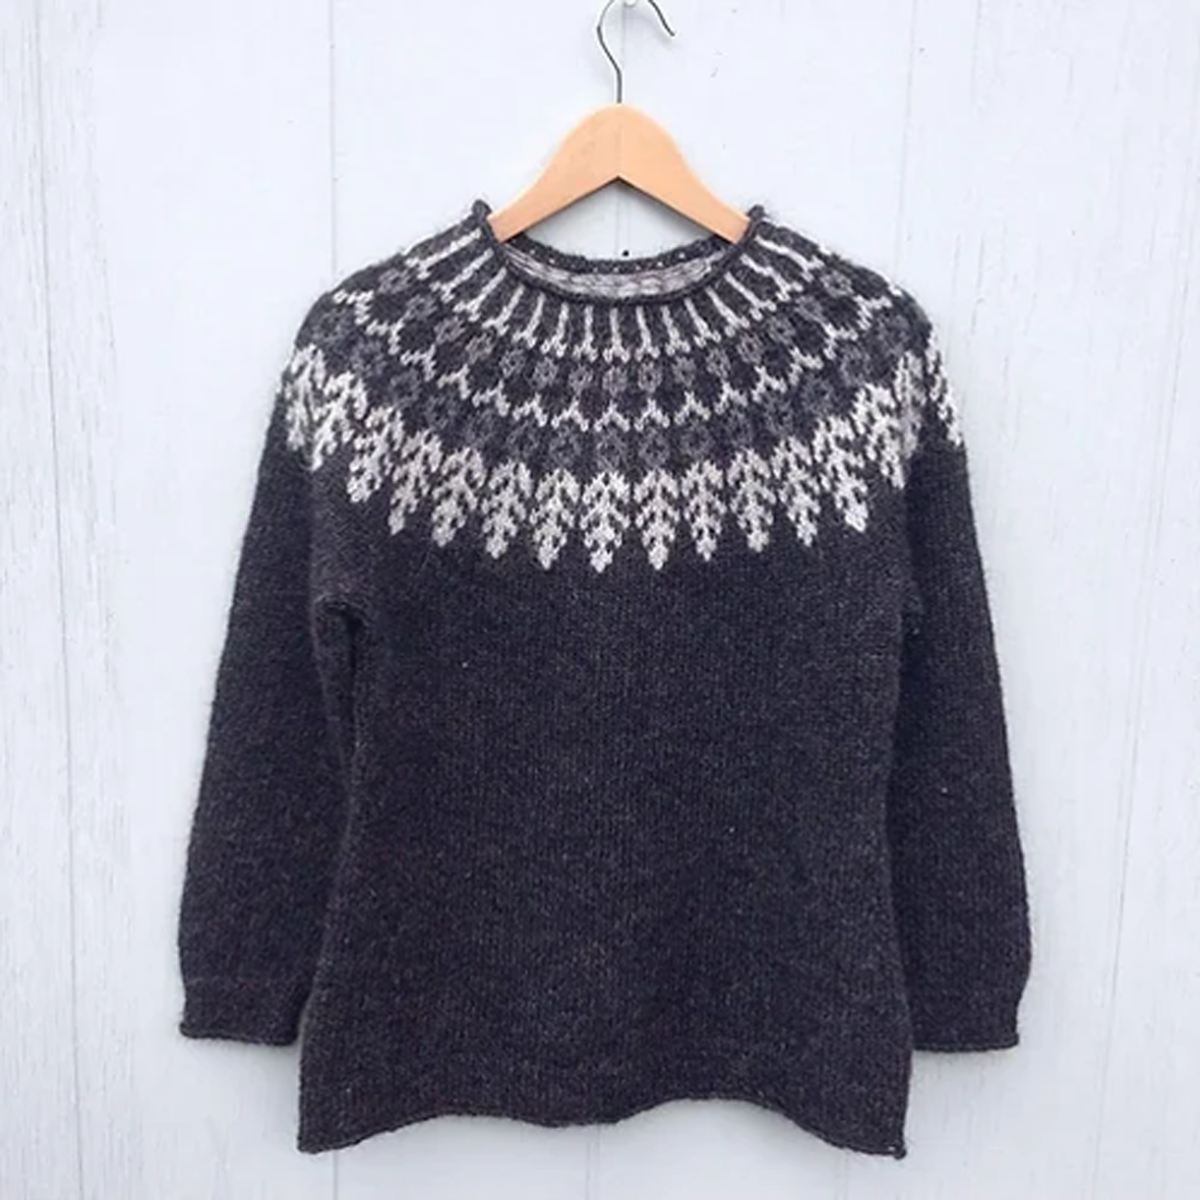 FJÄDER Sweater | English Knitting Pattern by Hanne Rimmen